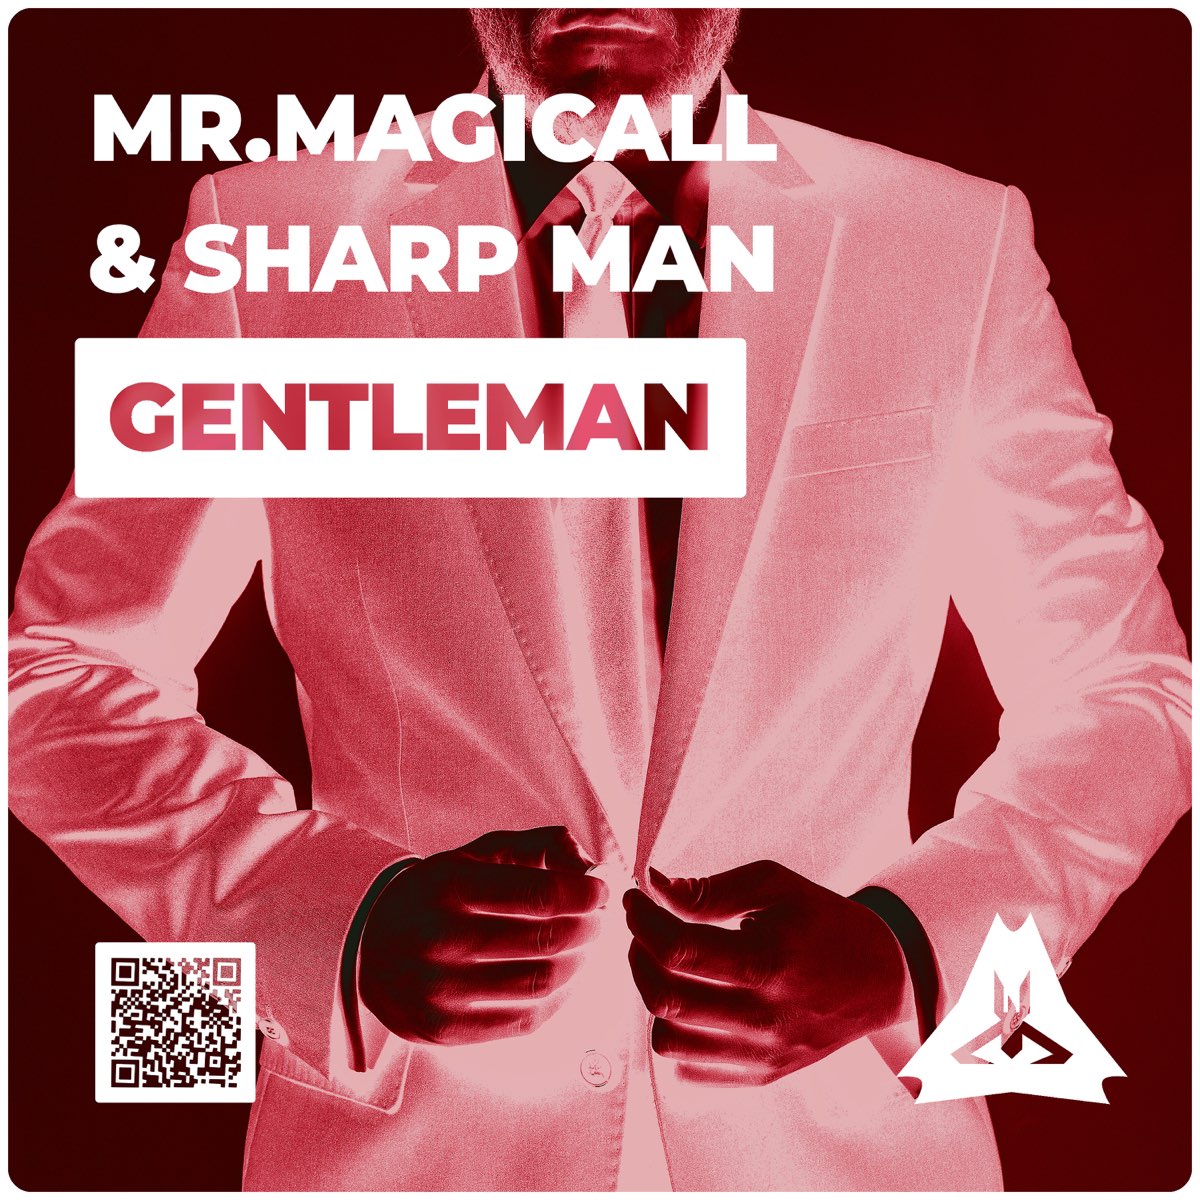 Слушать музыку джентльмен. Джентльмен сингл. Альбом джентльмены. Джентльмен песня. Песня Мистер джентльмен.